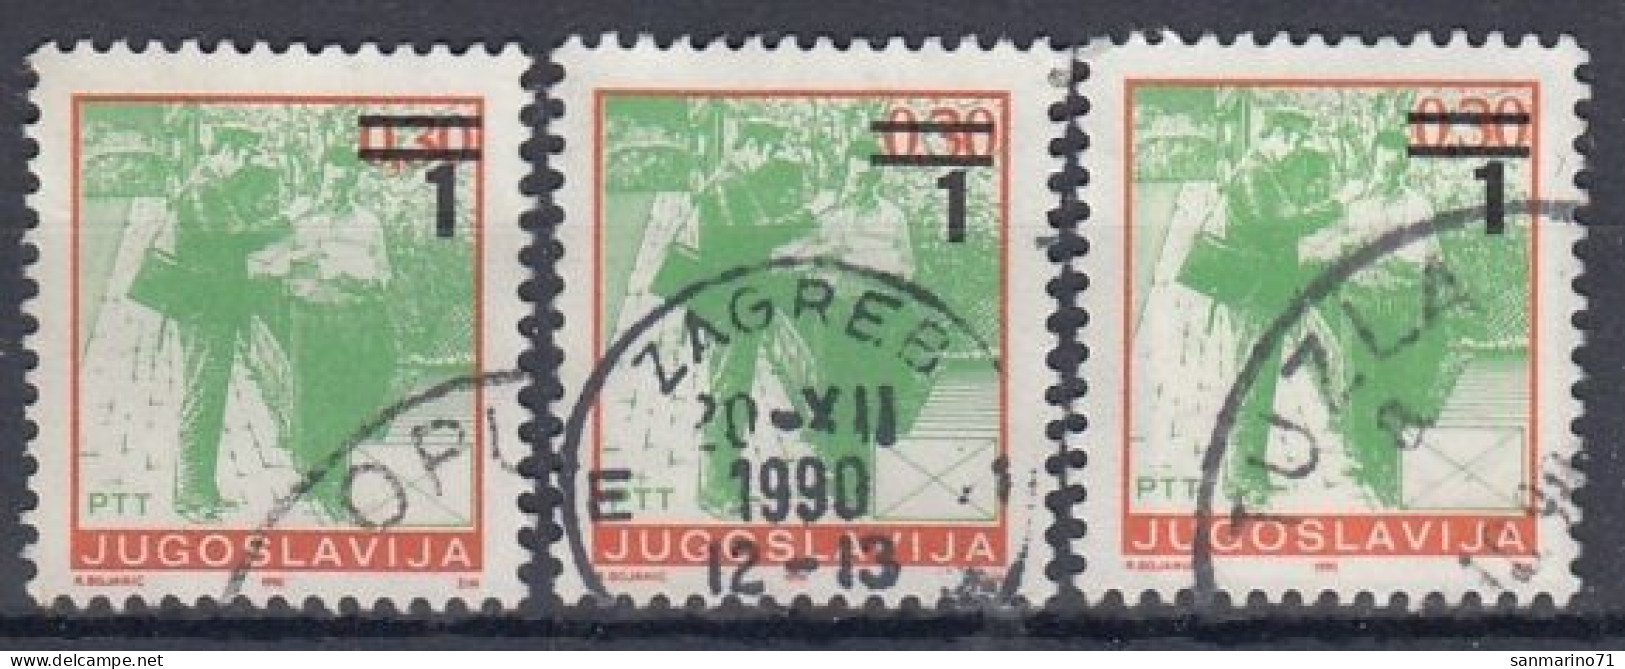 YUGOSLAVIA 2433,used,falc Hinged - Post